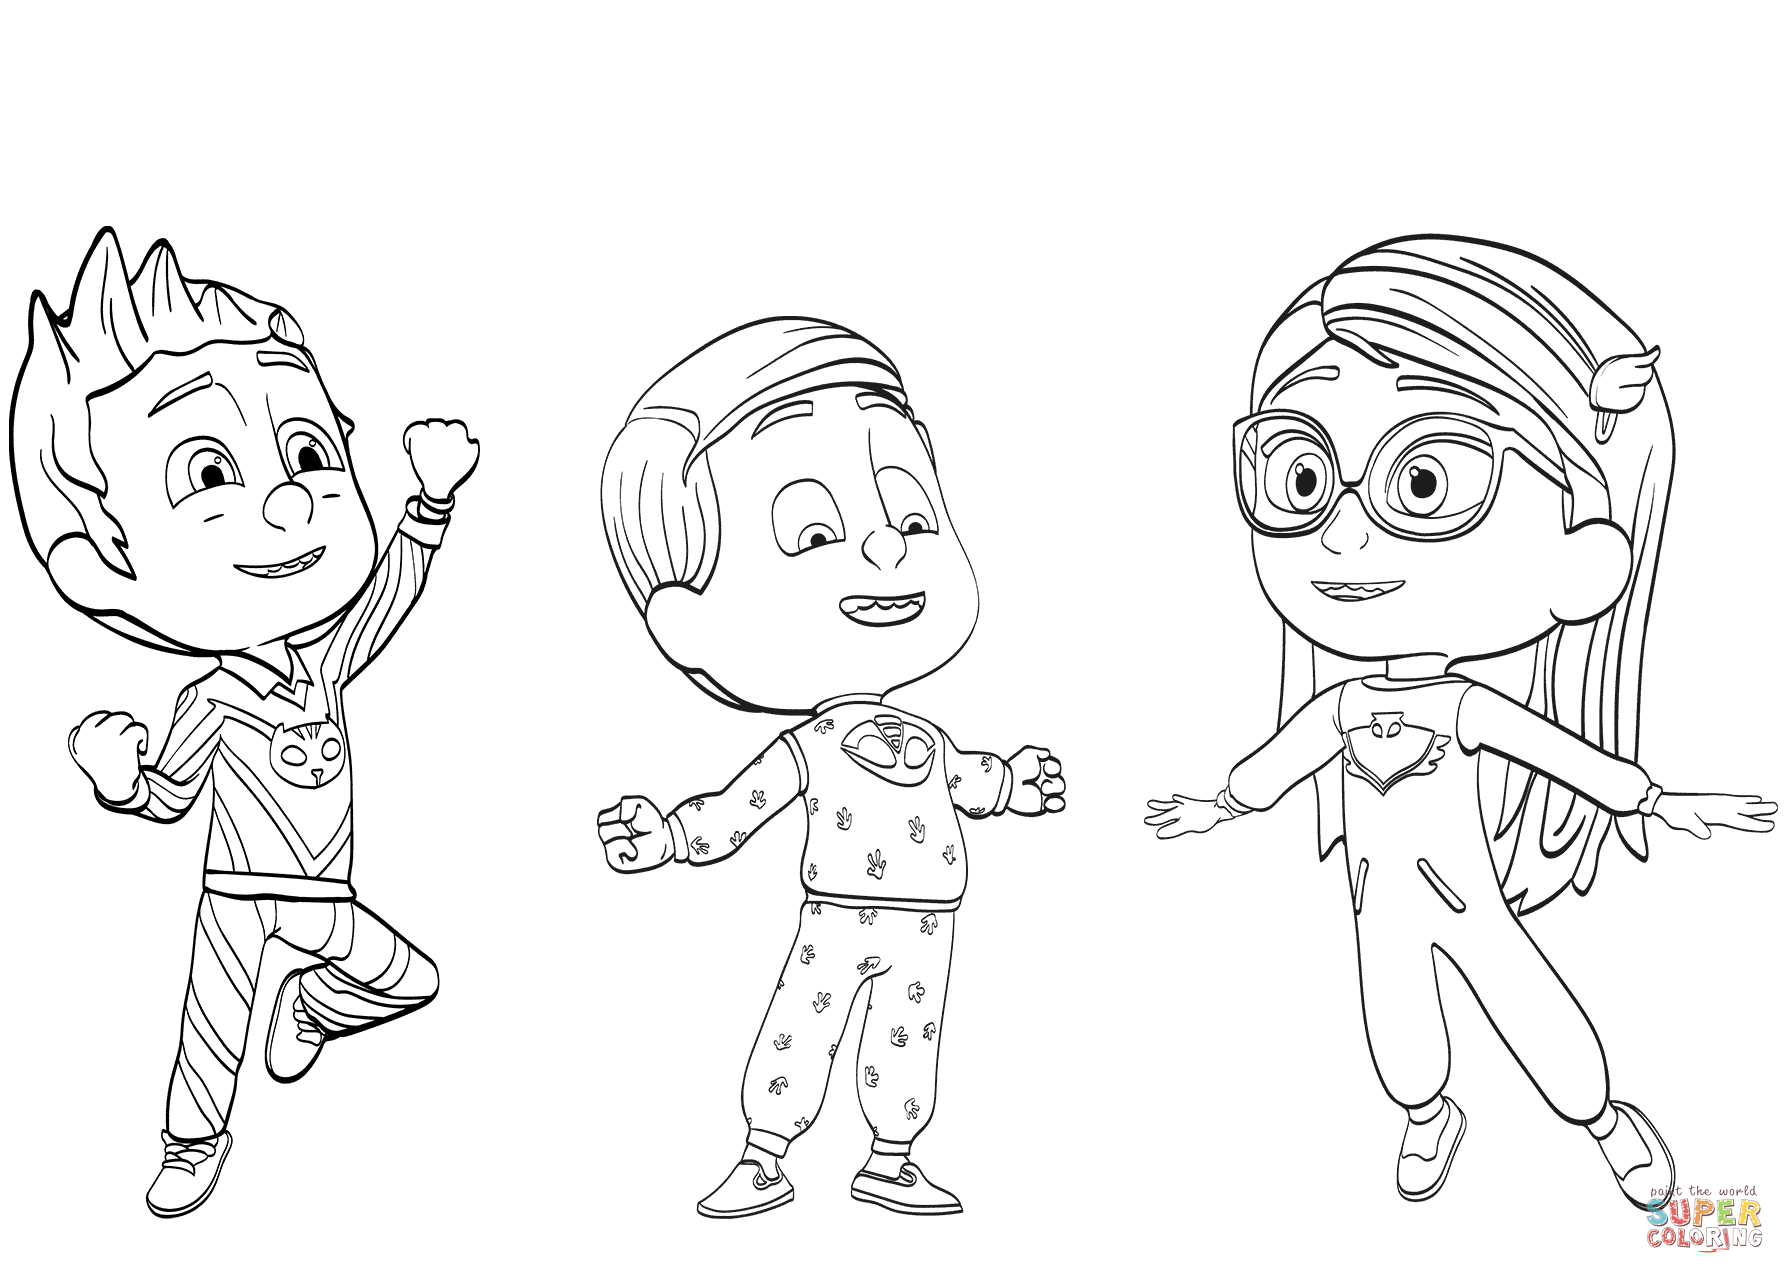 Pj Masks Pajama Heroes Coloring Page | Free Printable Coloring Pages - Free Printable Pajama Coloring Pages